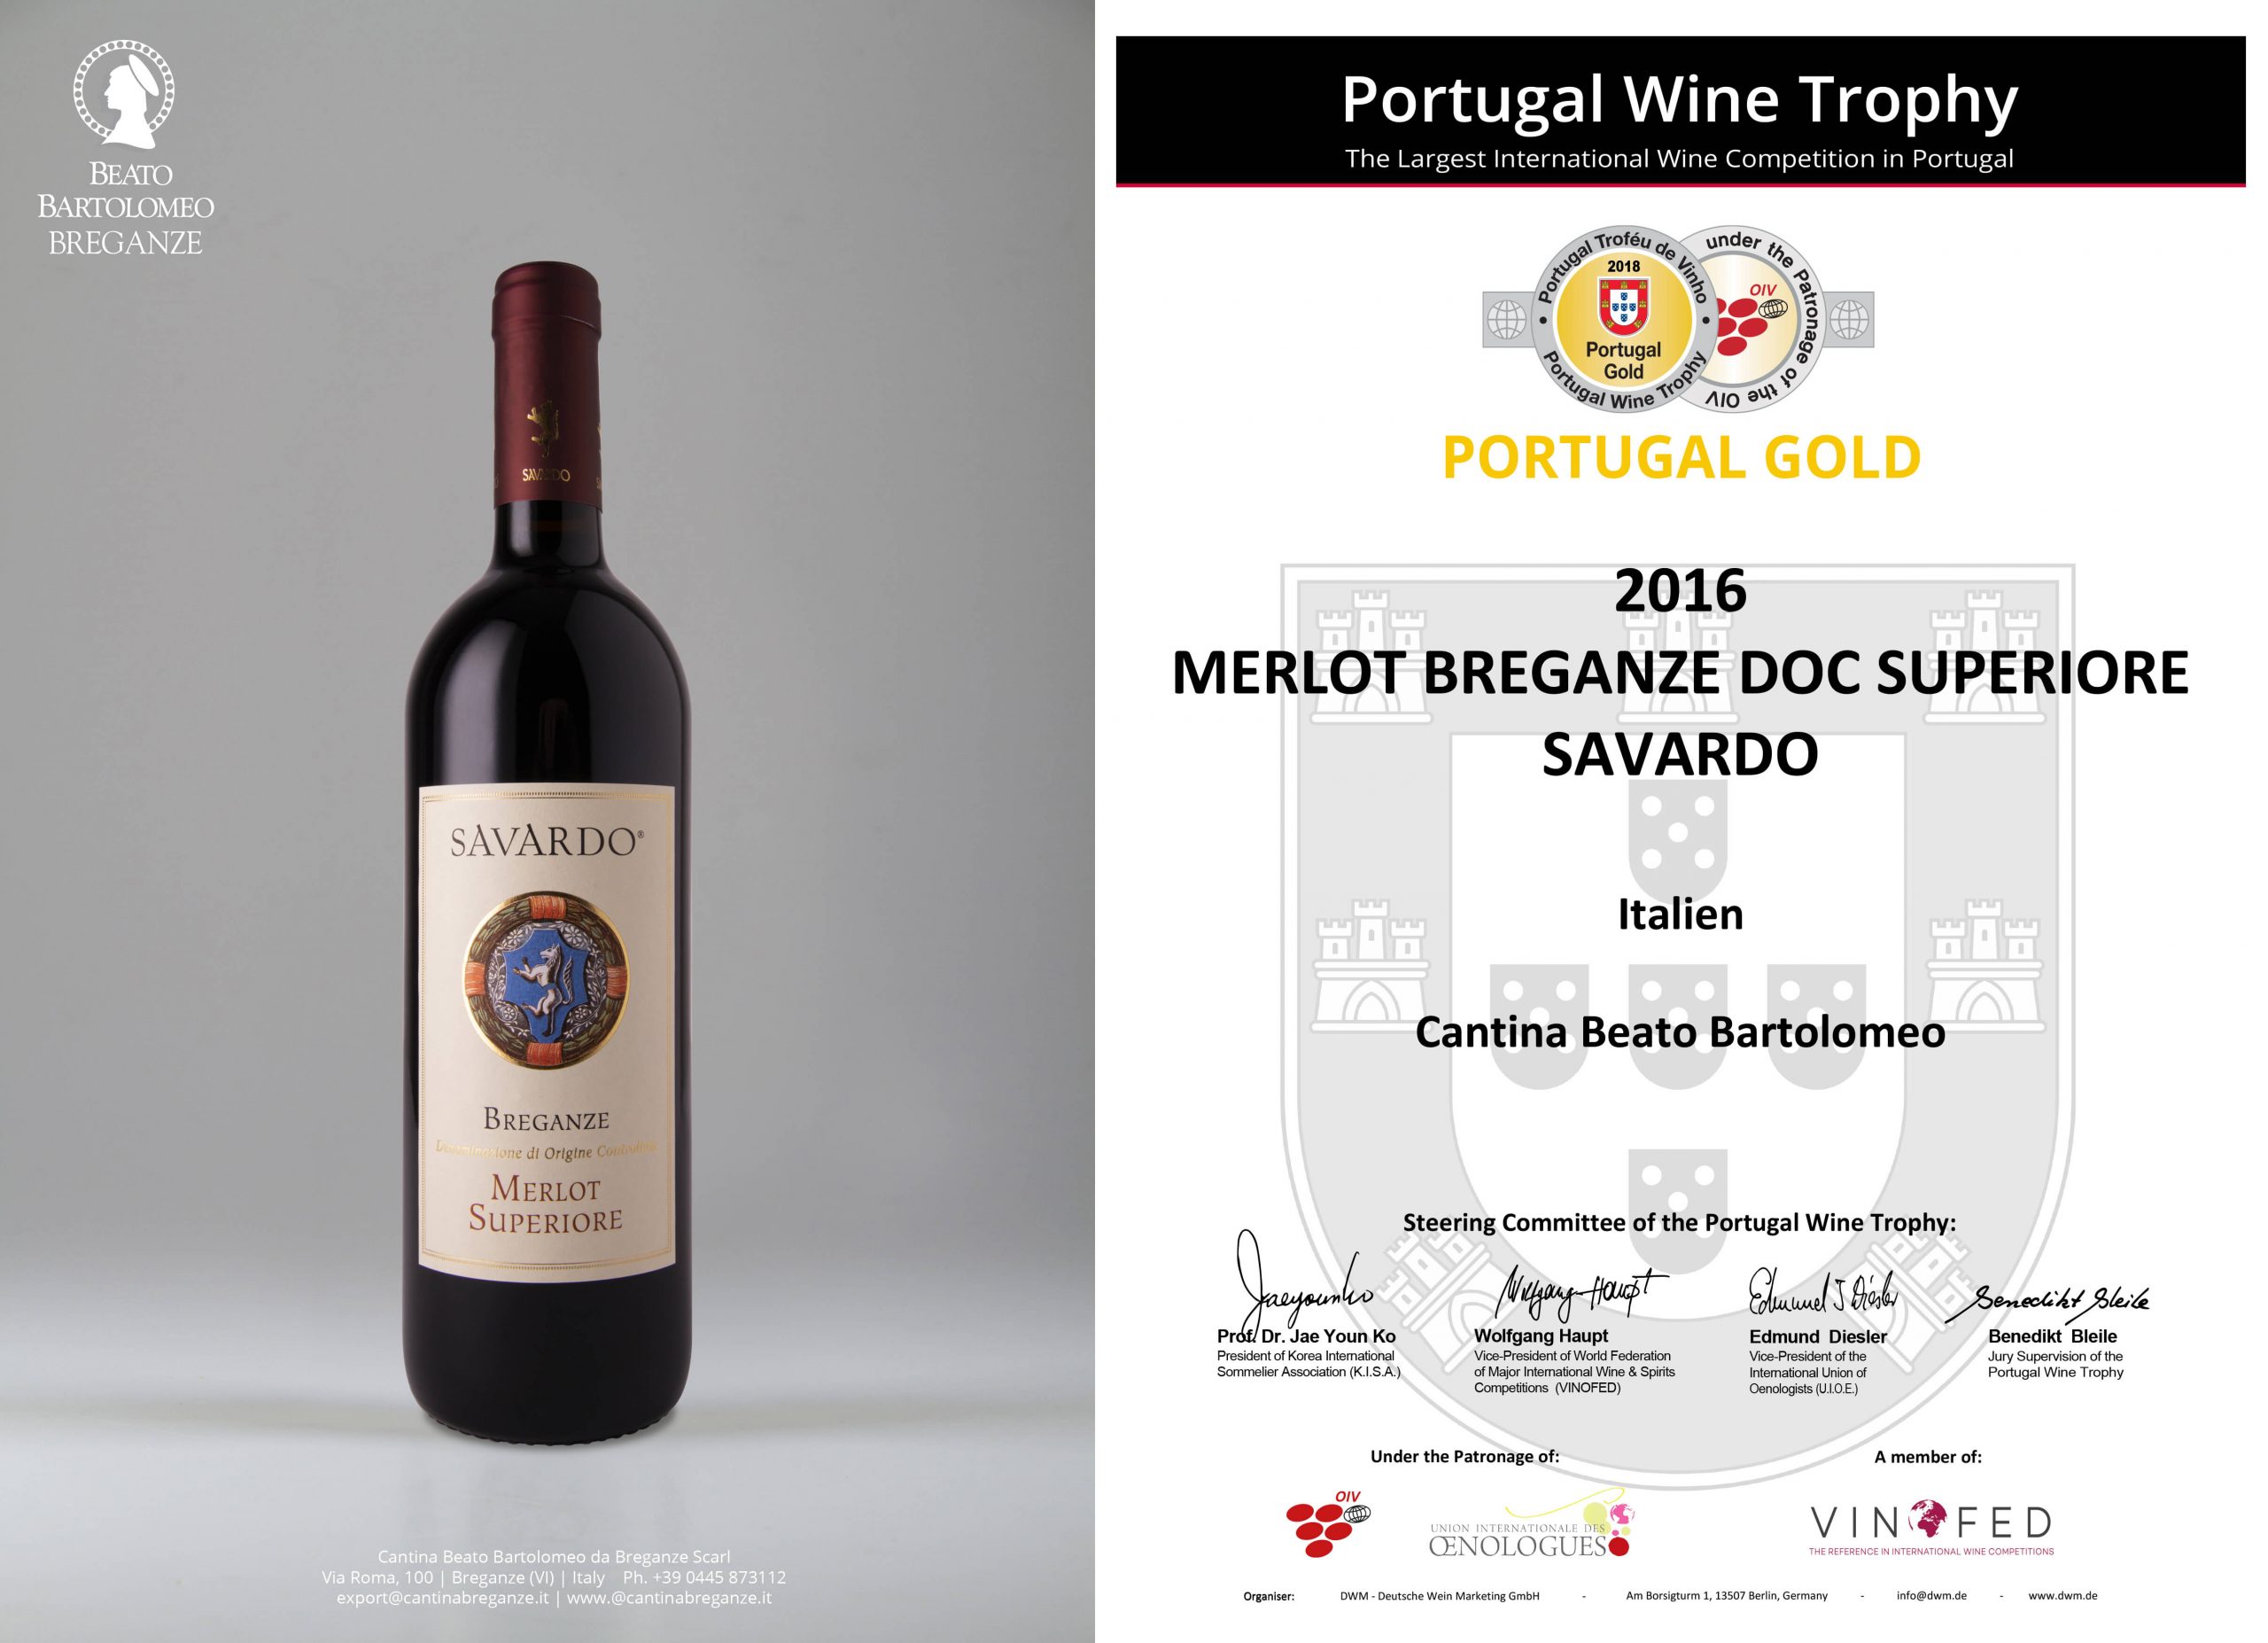 Merlot Breganze DOC Superiore “Savardo” Portugal Wine Trophy 2018